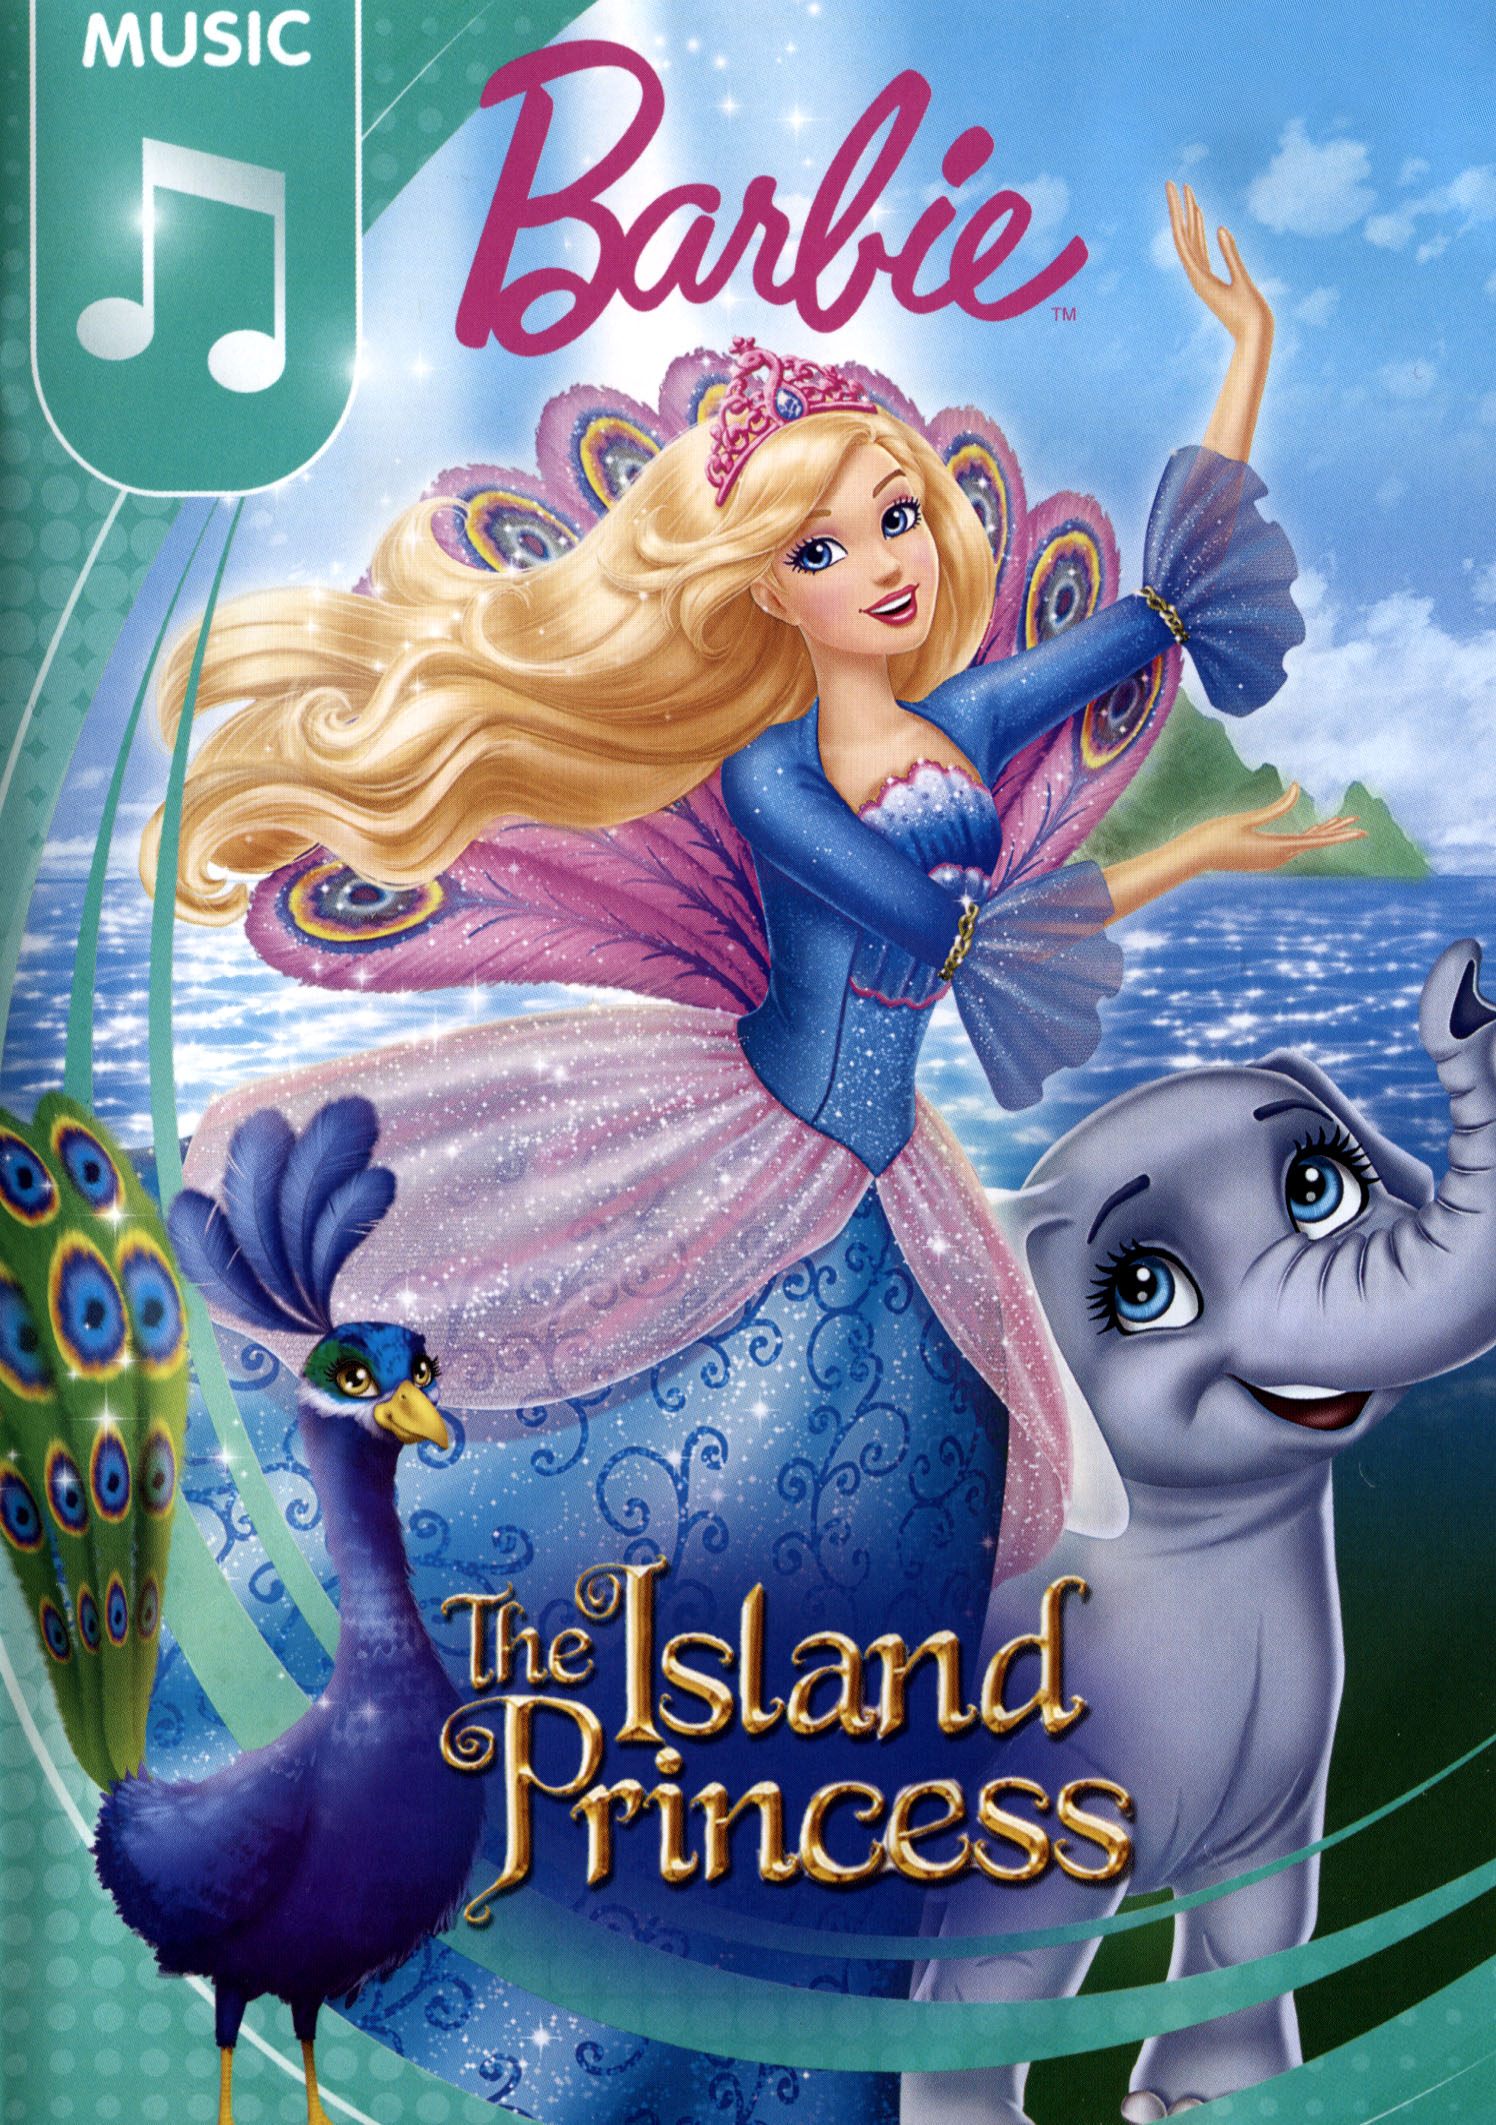 Barbie As The Island Princess [Dvd] [2007] - Best Buy